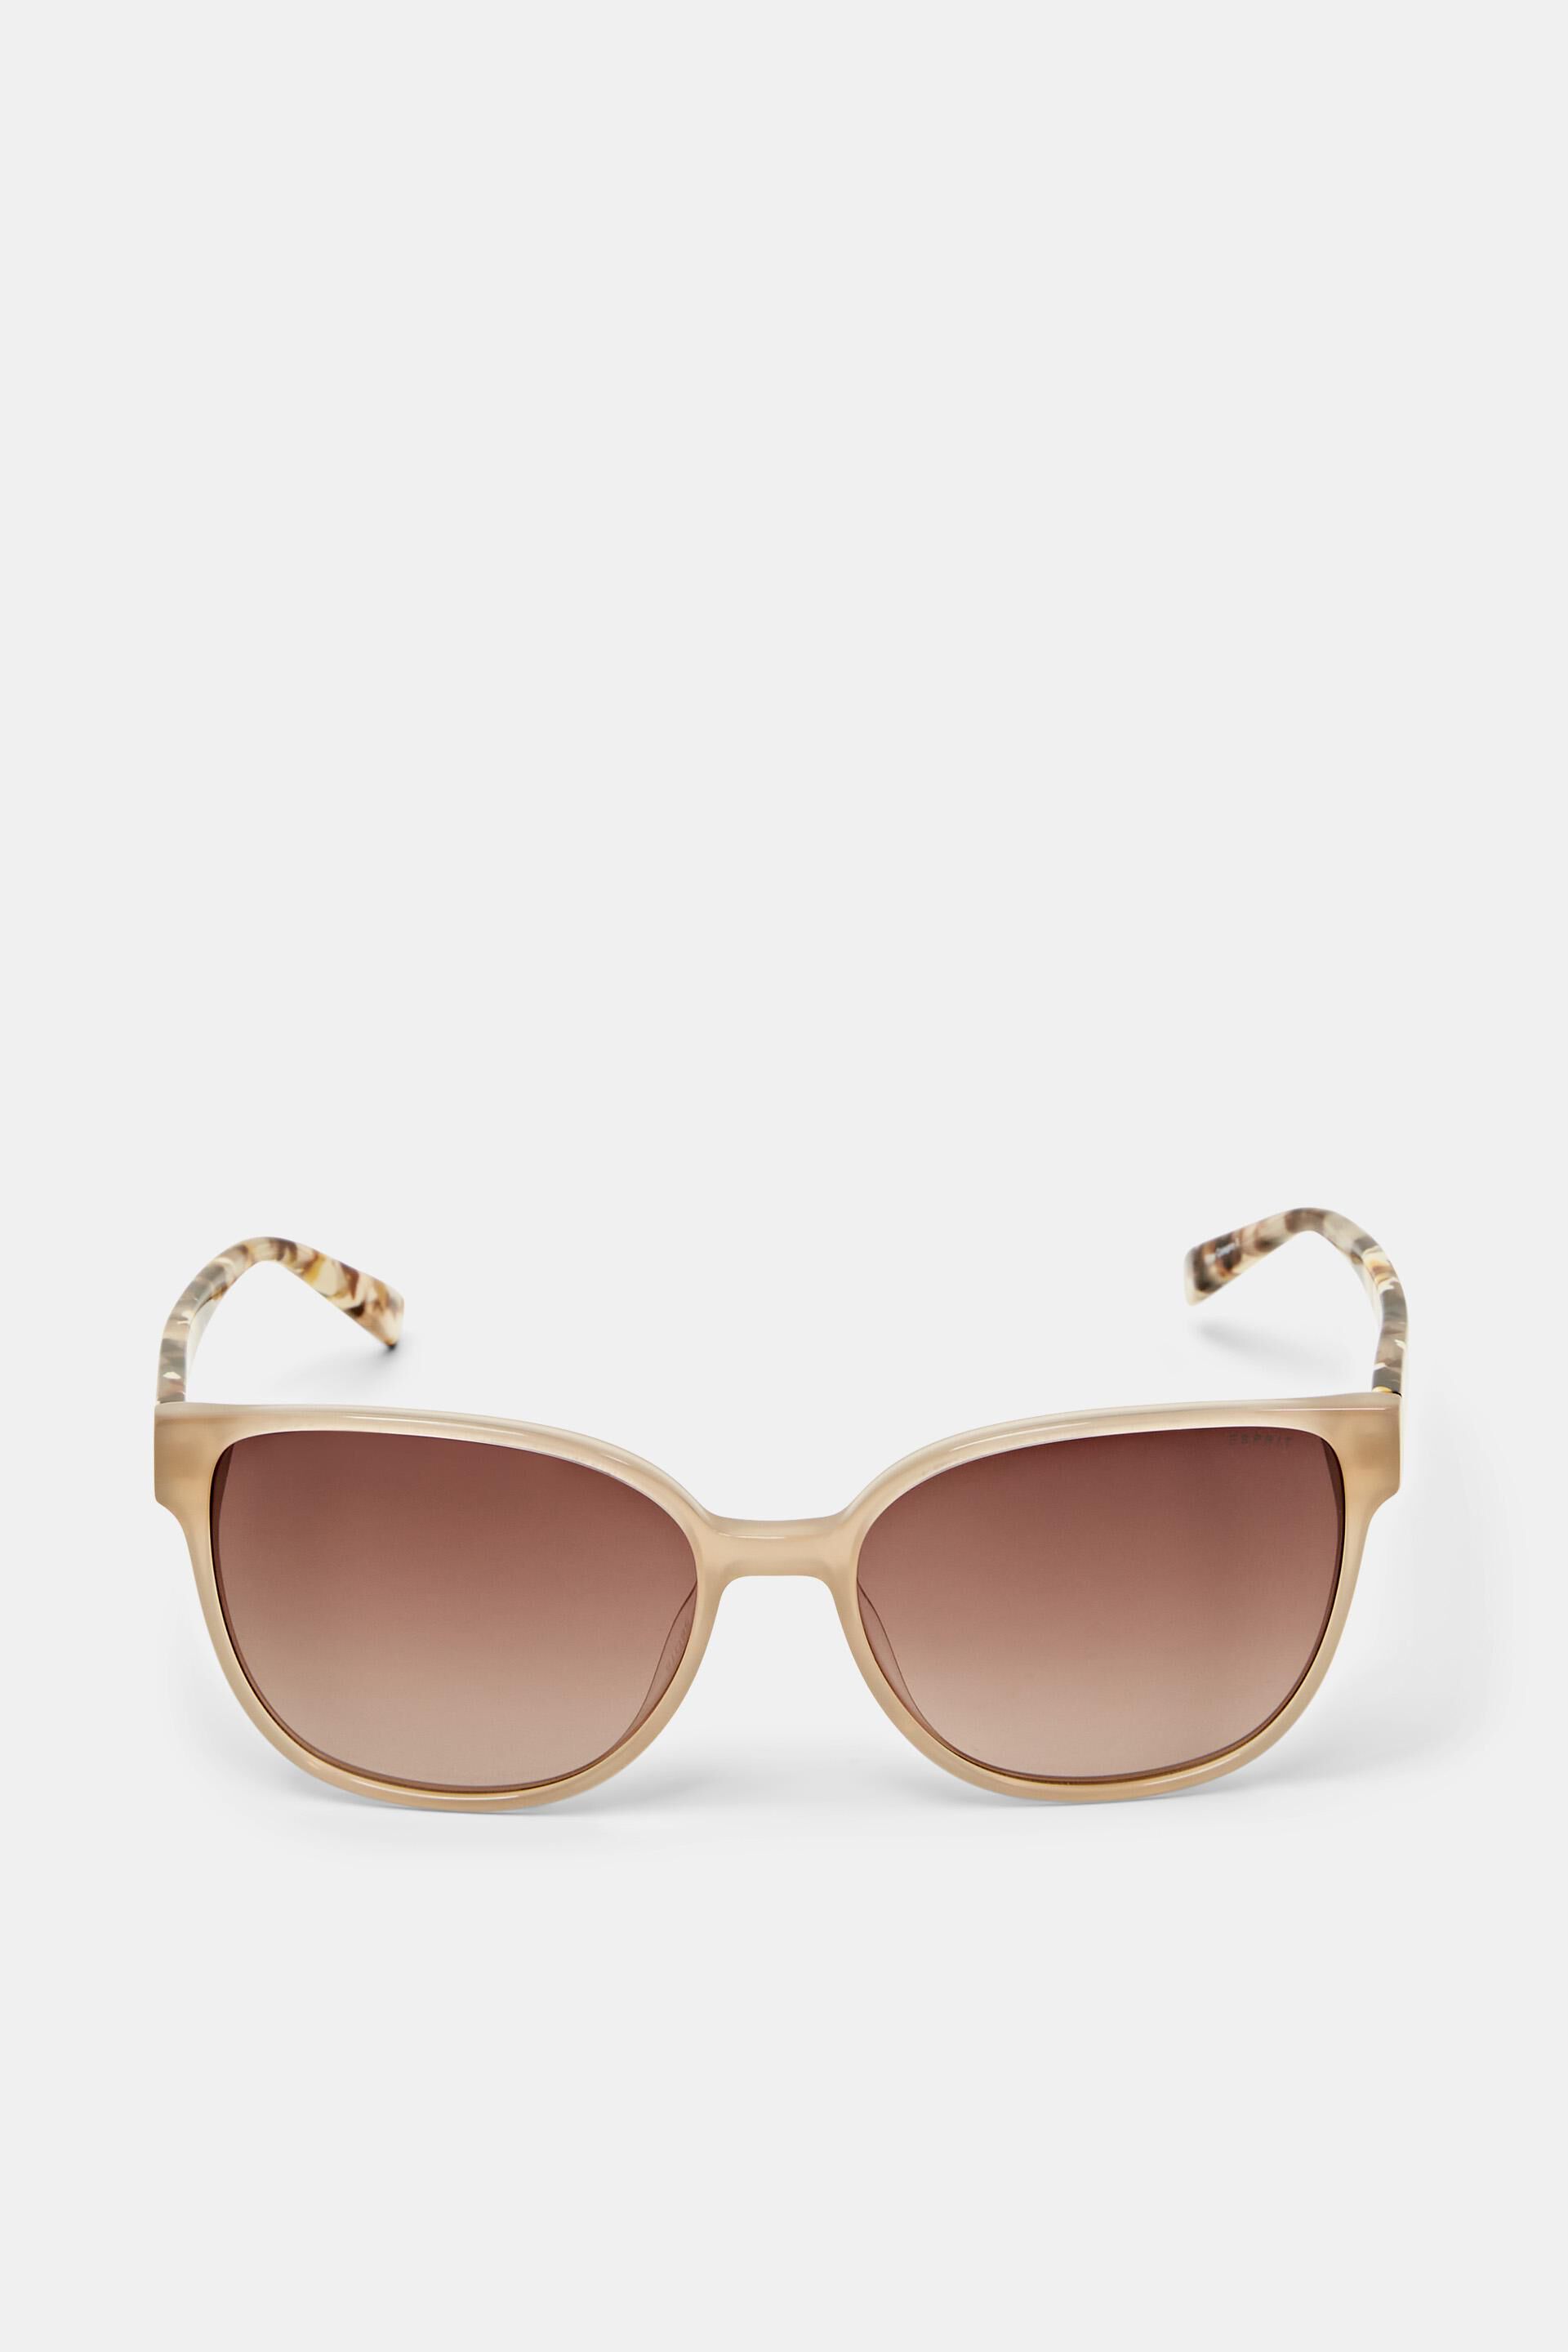 Esprit sunglasses framed Square